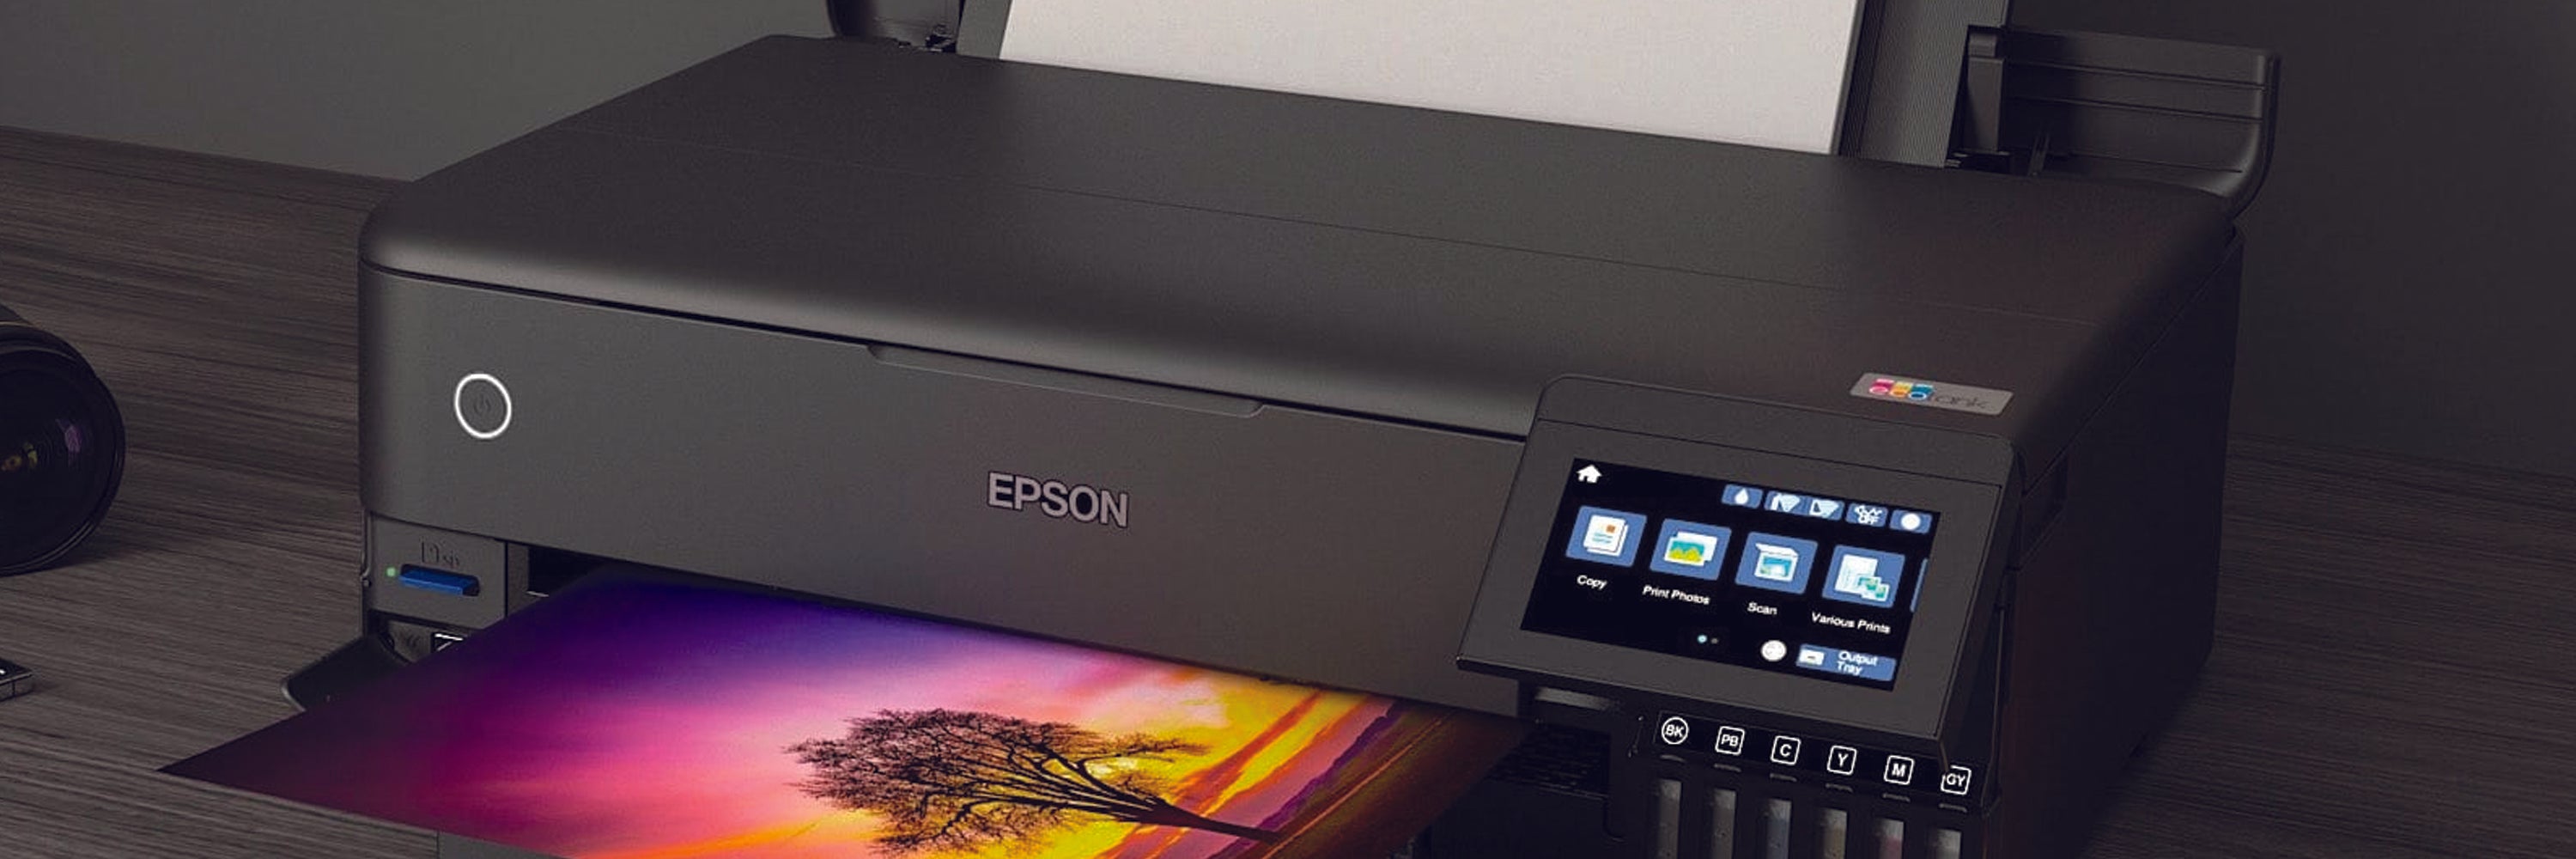 EPSON XP - 2105 Printer Unboxing 